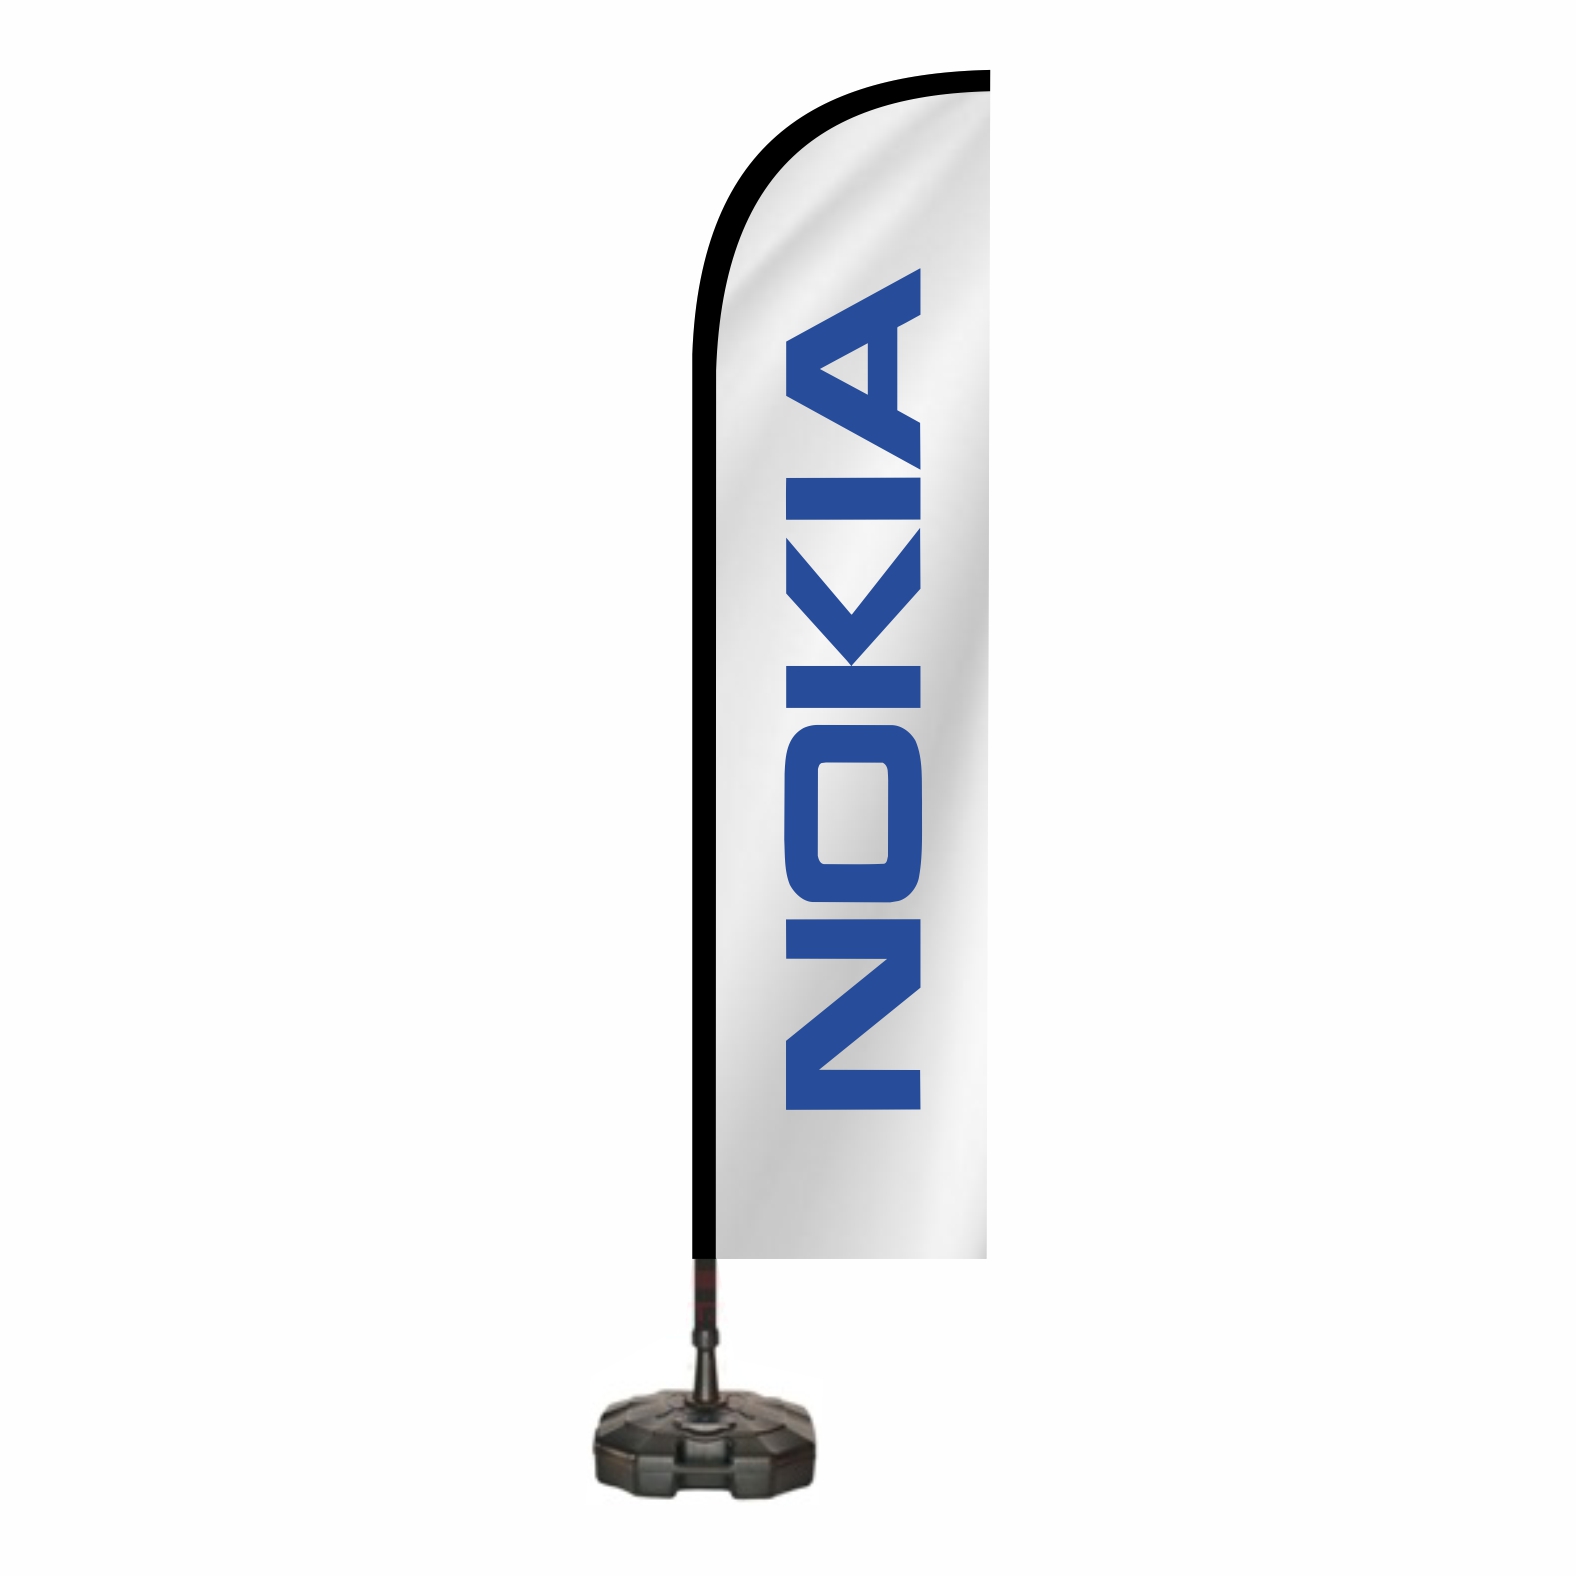 Nokia Cadde Bayra Yapan Firmalar